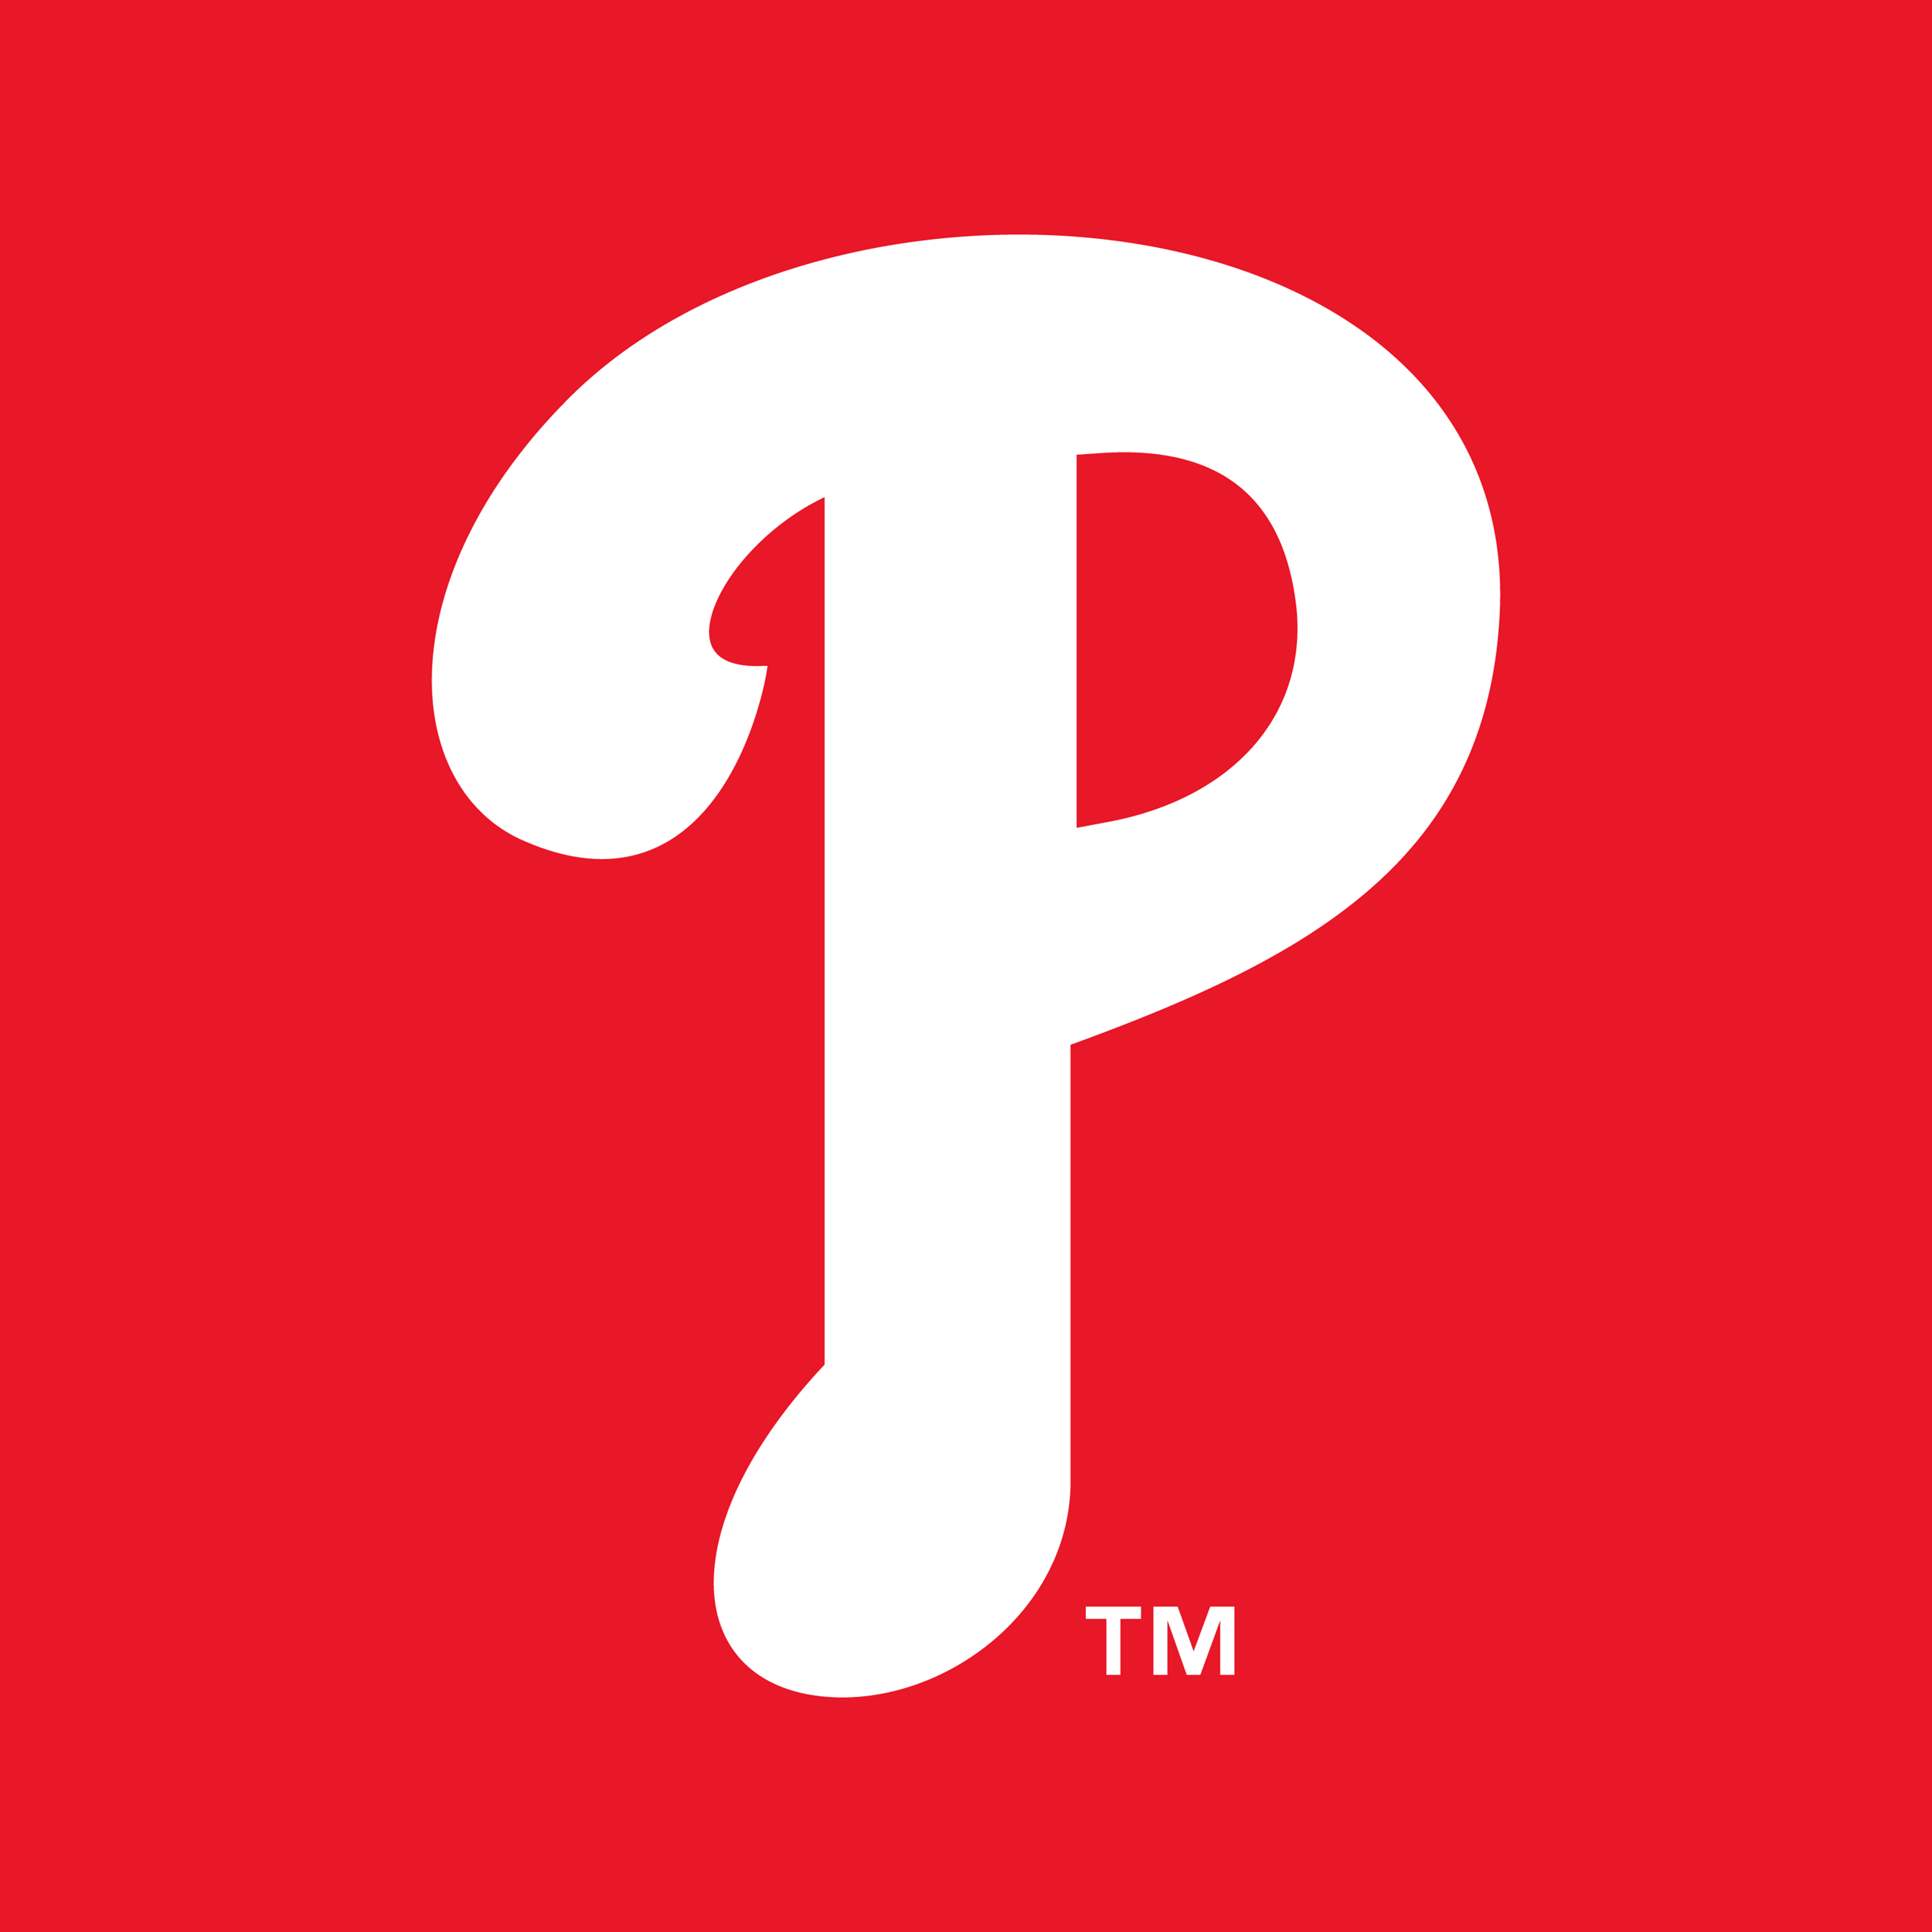 Long Red P Logo - Philadelphia Phillies Logo PNG Transparent & SVG Vector - Freebie Supply